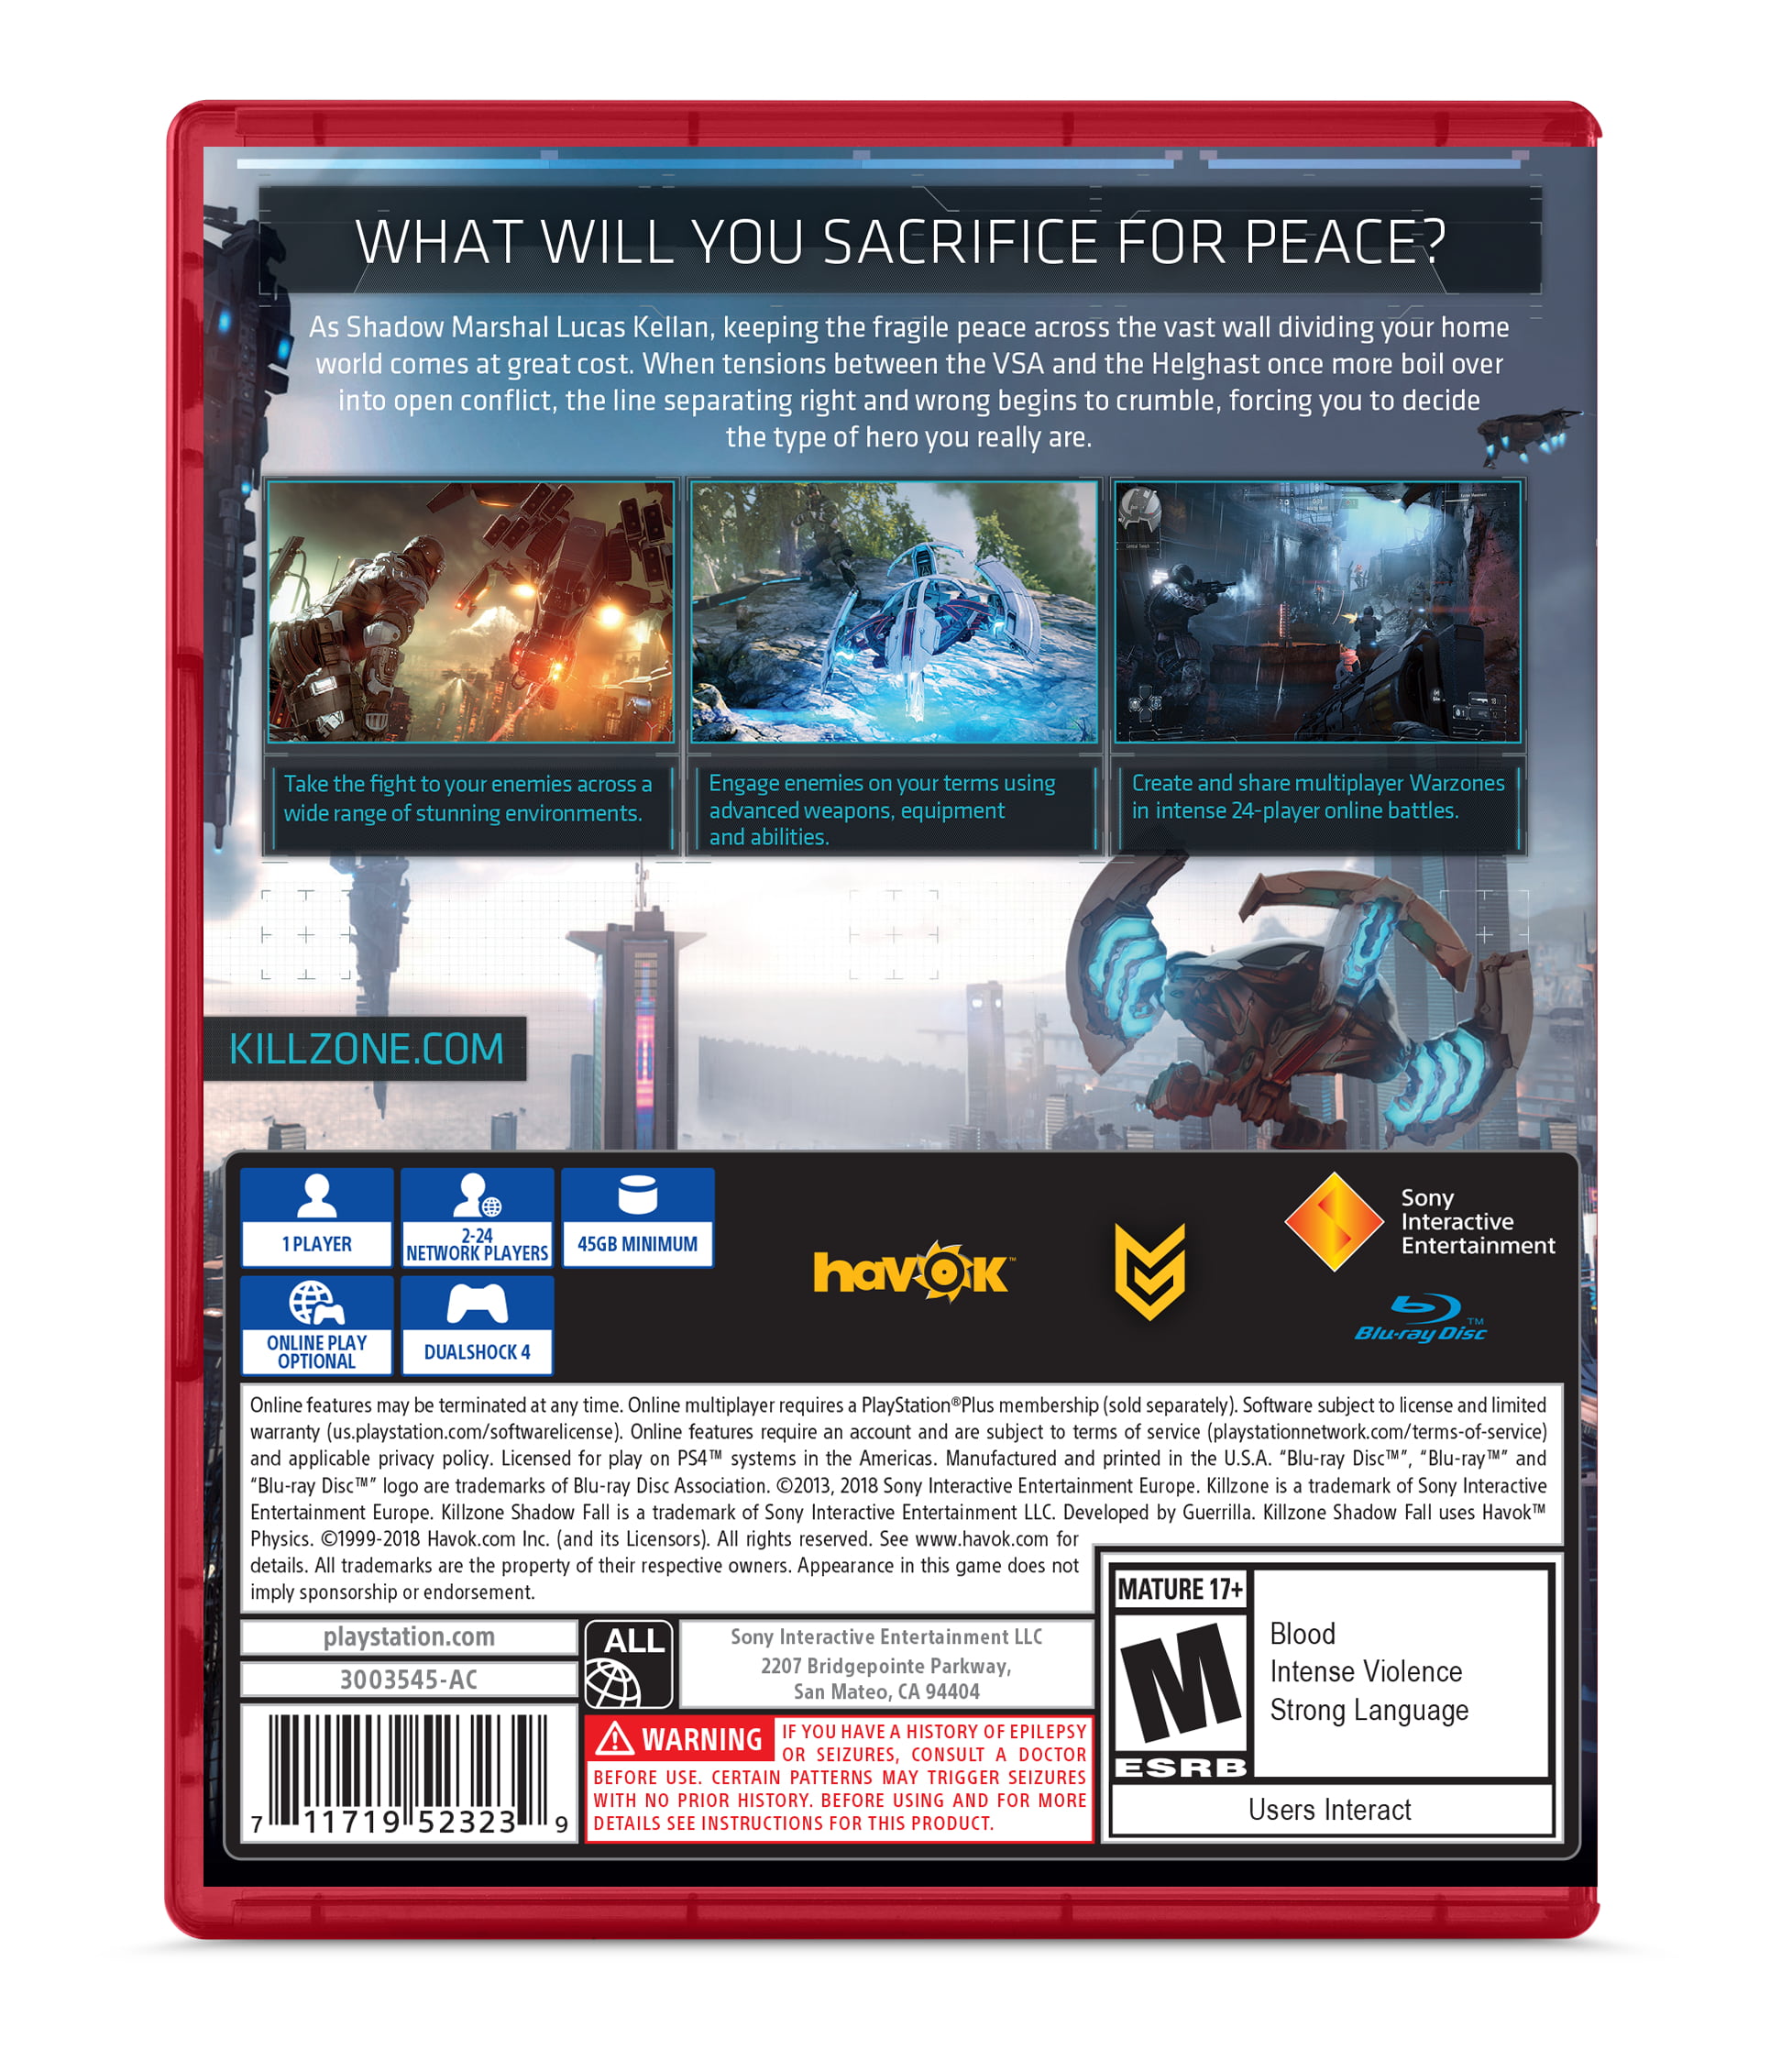 PS4 - Killzone Shadow Fall (GH) SEALED